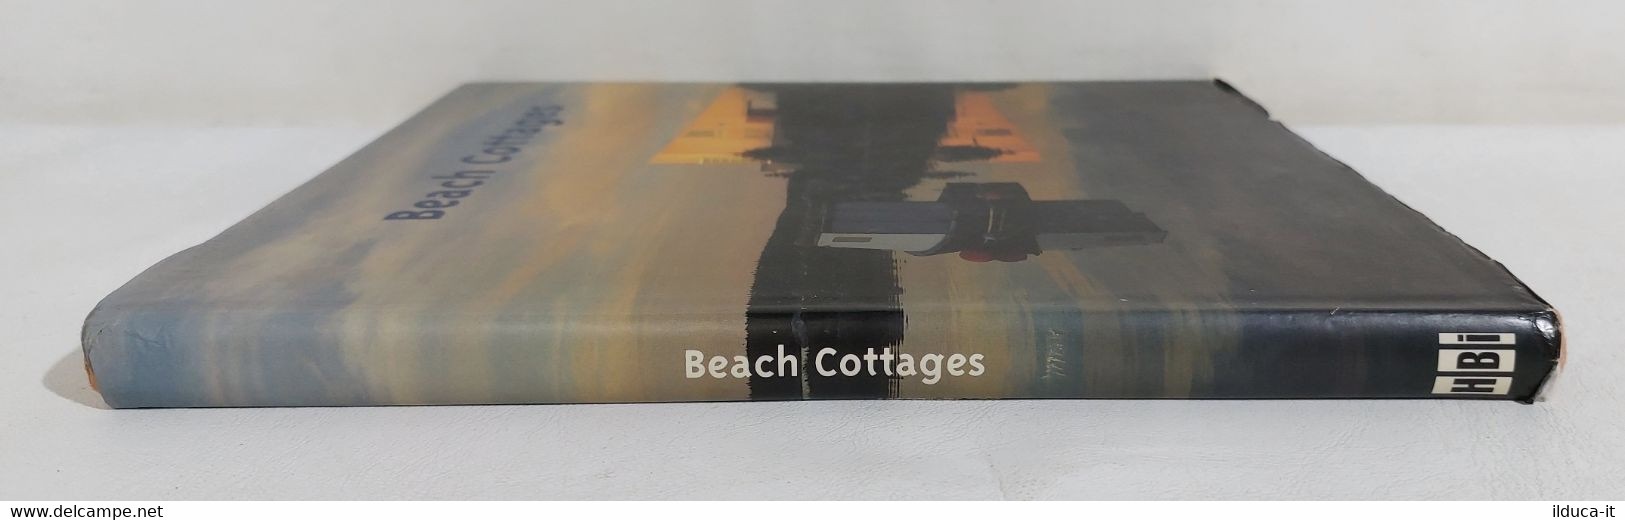 I109789 V BEACH COTTAGES - Loft 2002 - Architektur